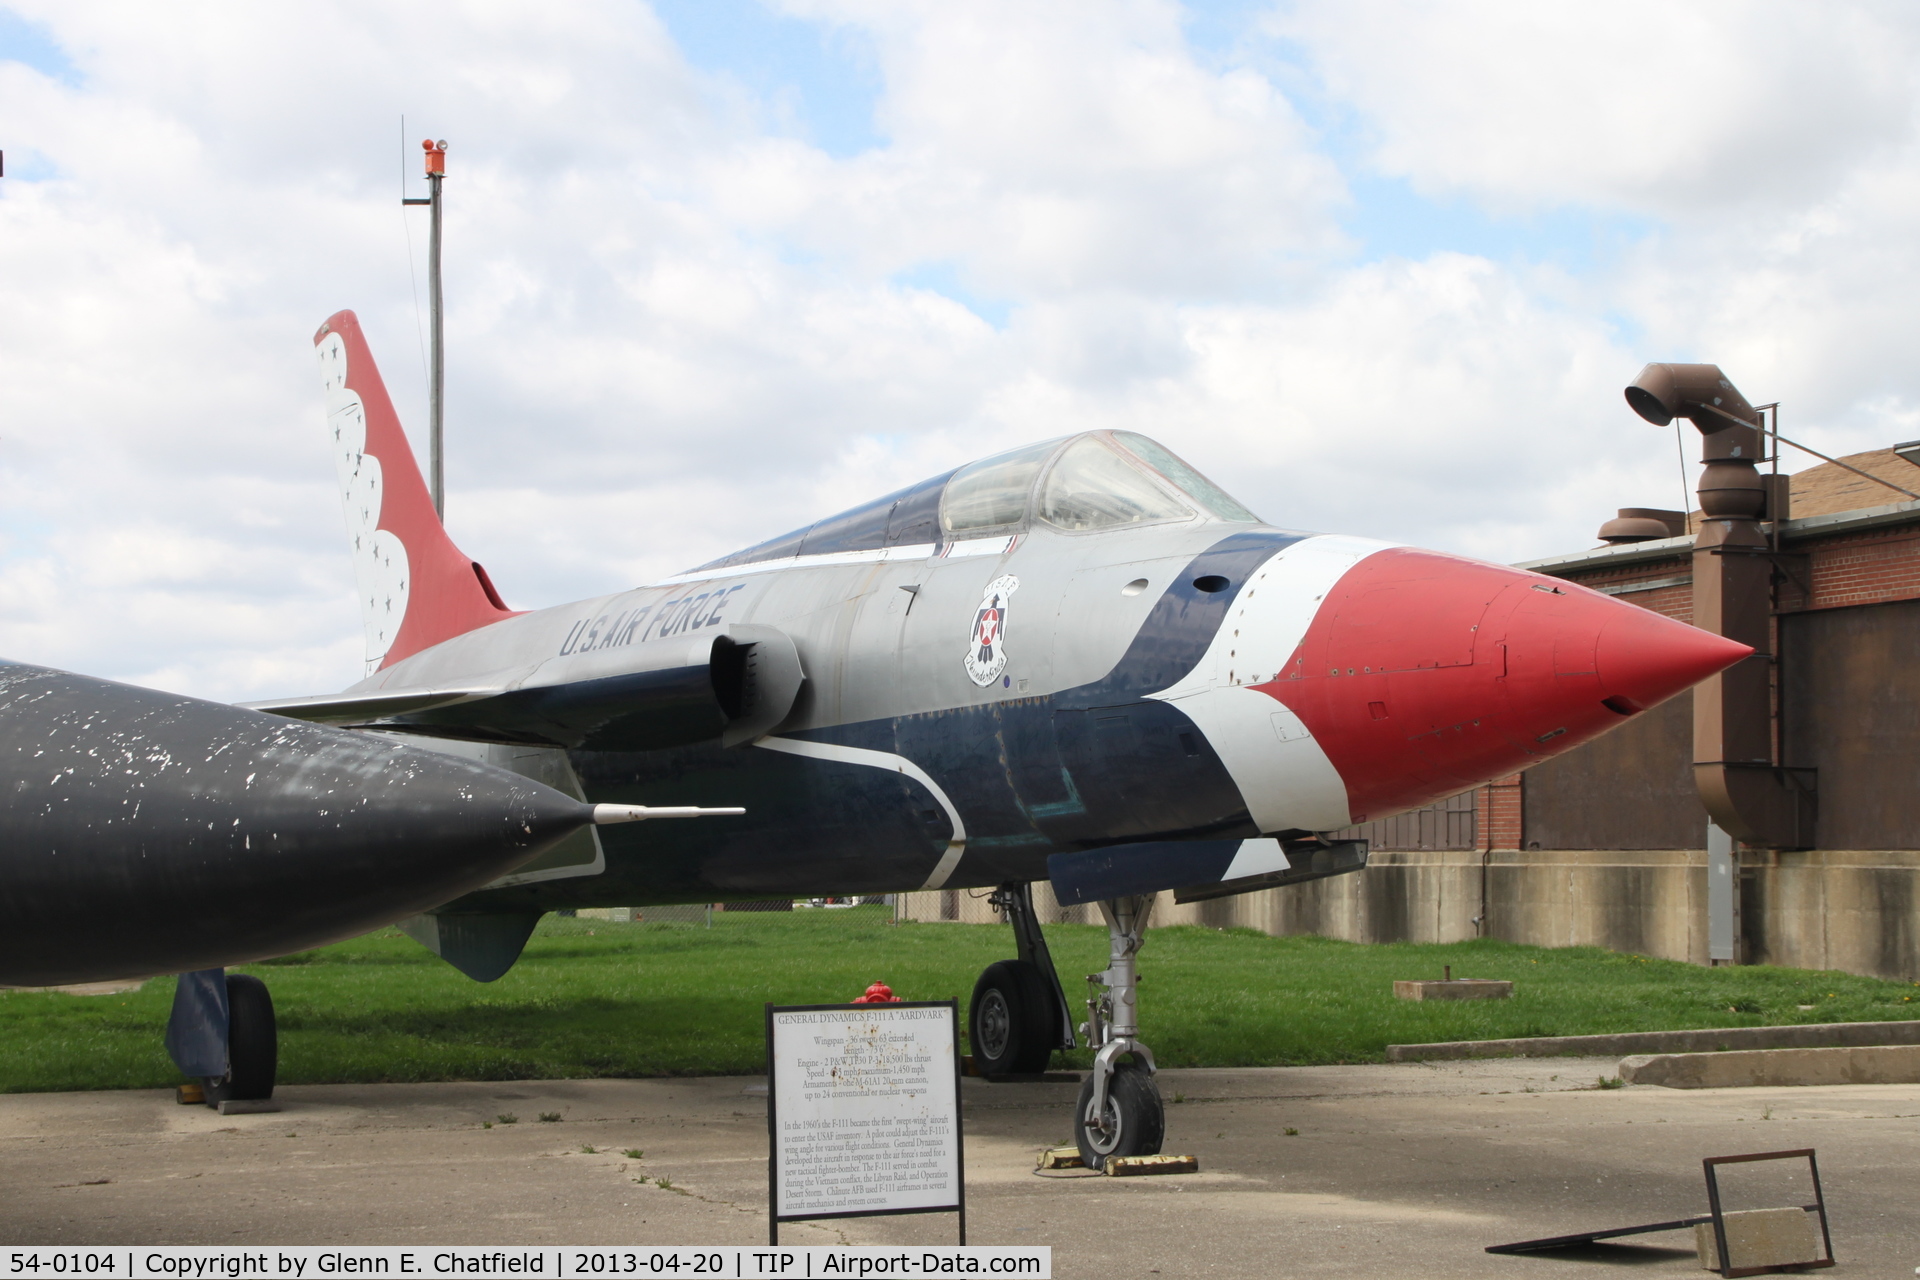 54-0104, 1957 Republic F-105B-5-RE Thunderchief C/N B.7, Chanute Air Museum. This aircraft was never a Thunderbird.